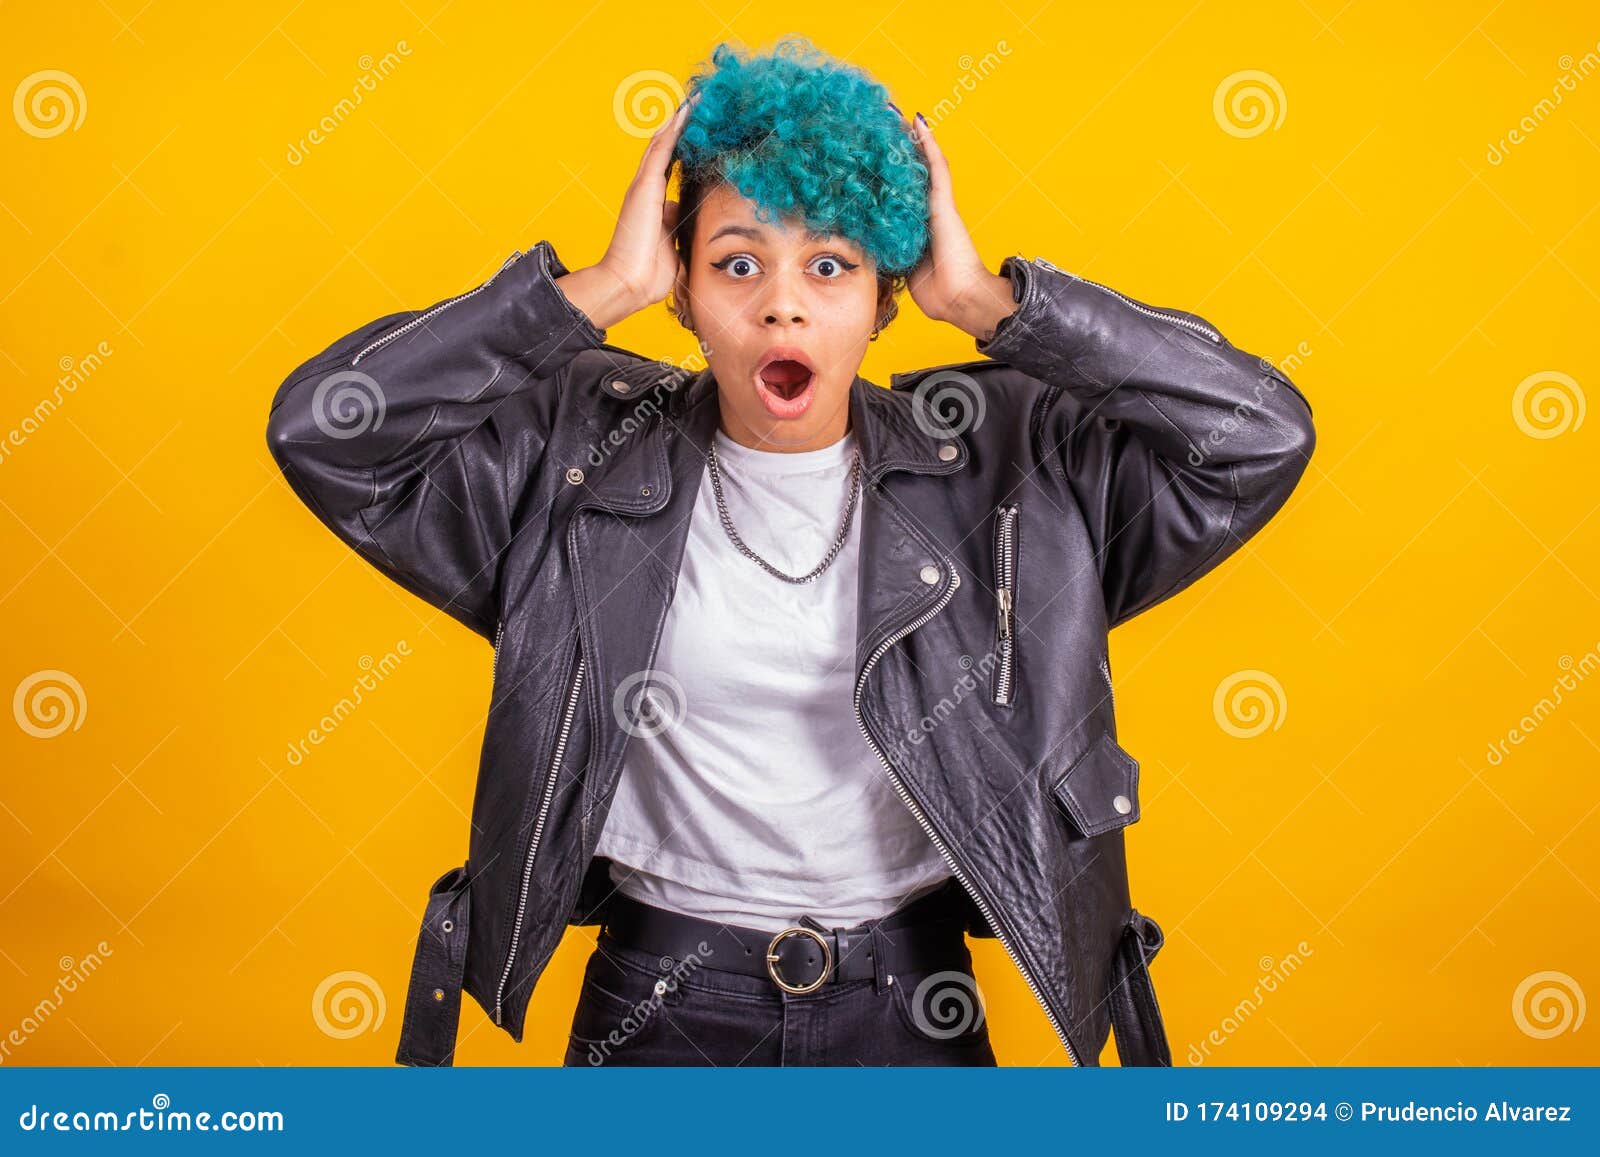 7. Dark Blue Curly Hair Guy - Google Images - wide 6